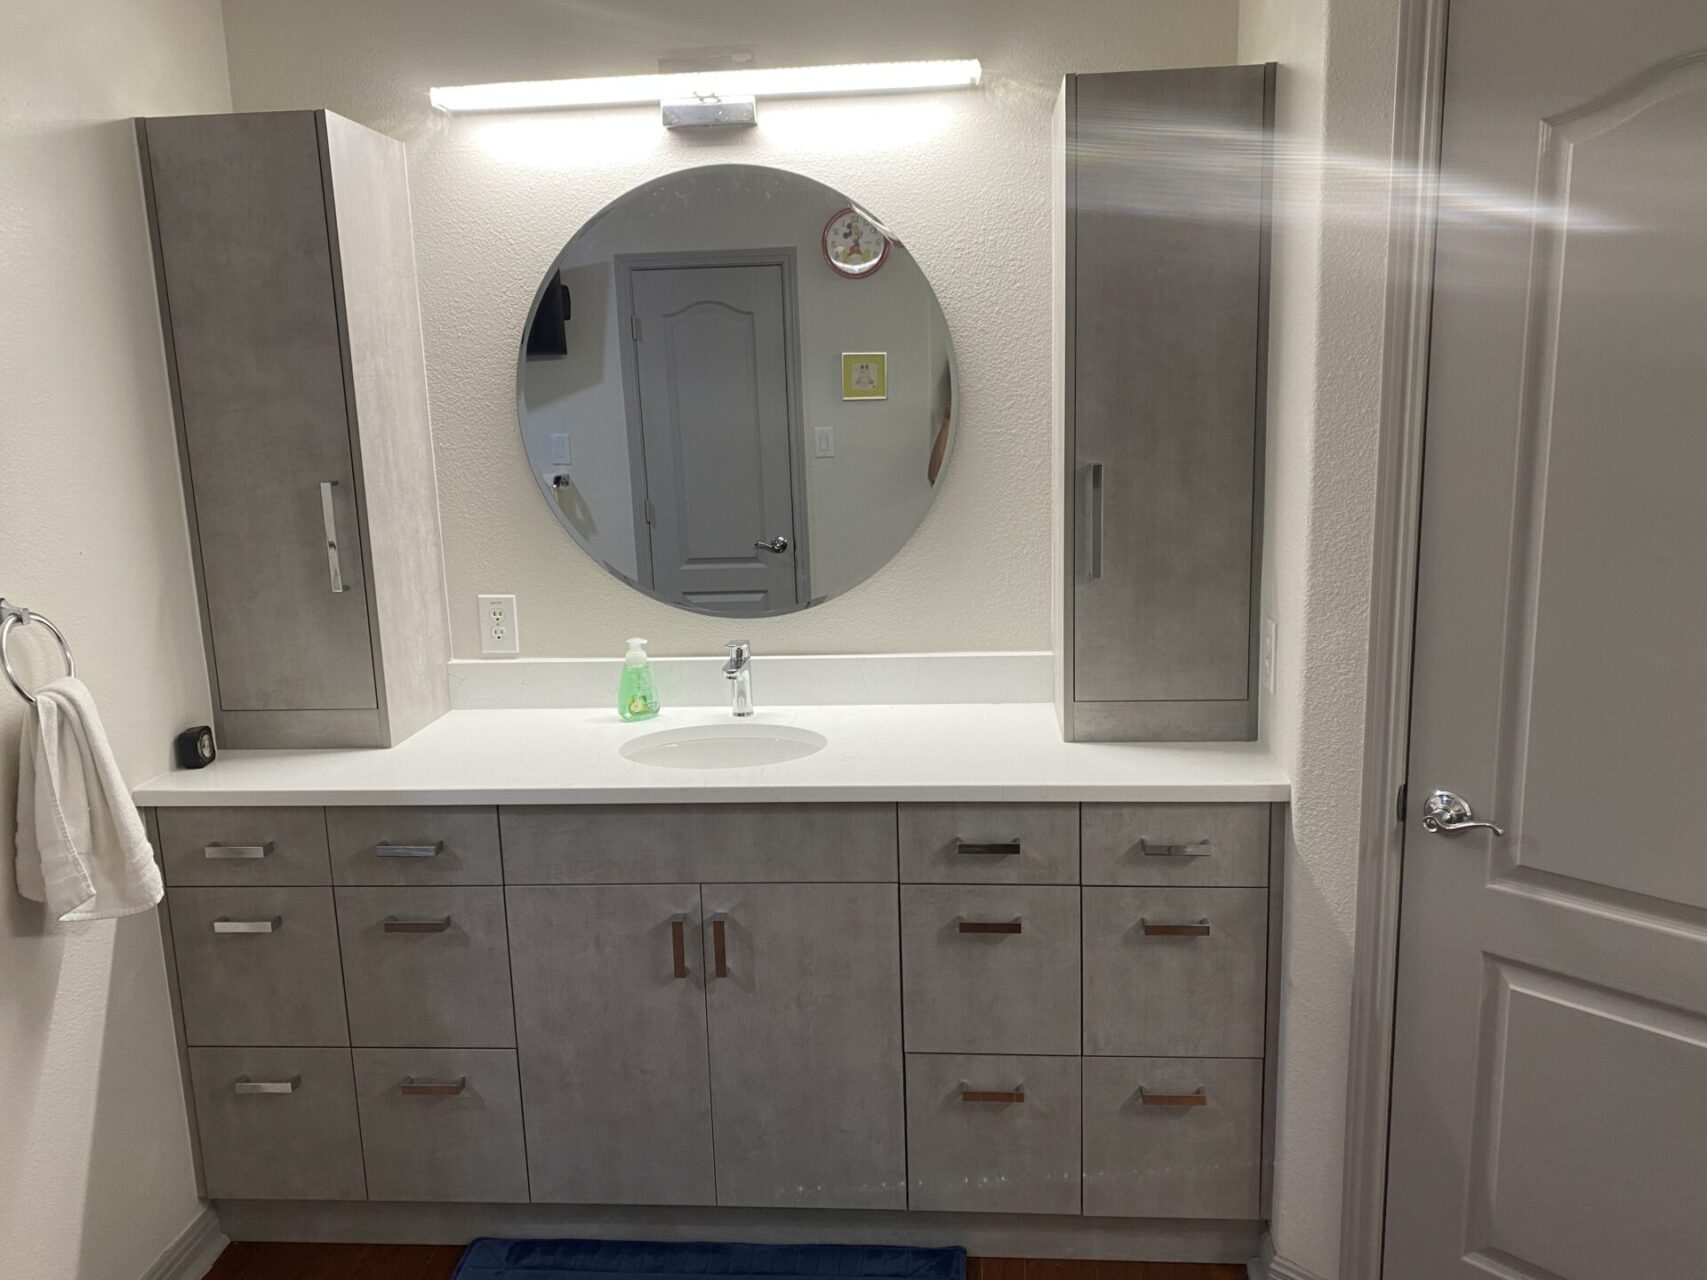 bathroom remodeling flat panel cabinets